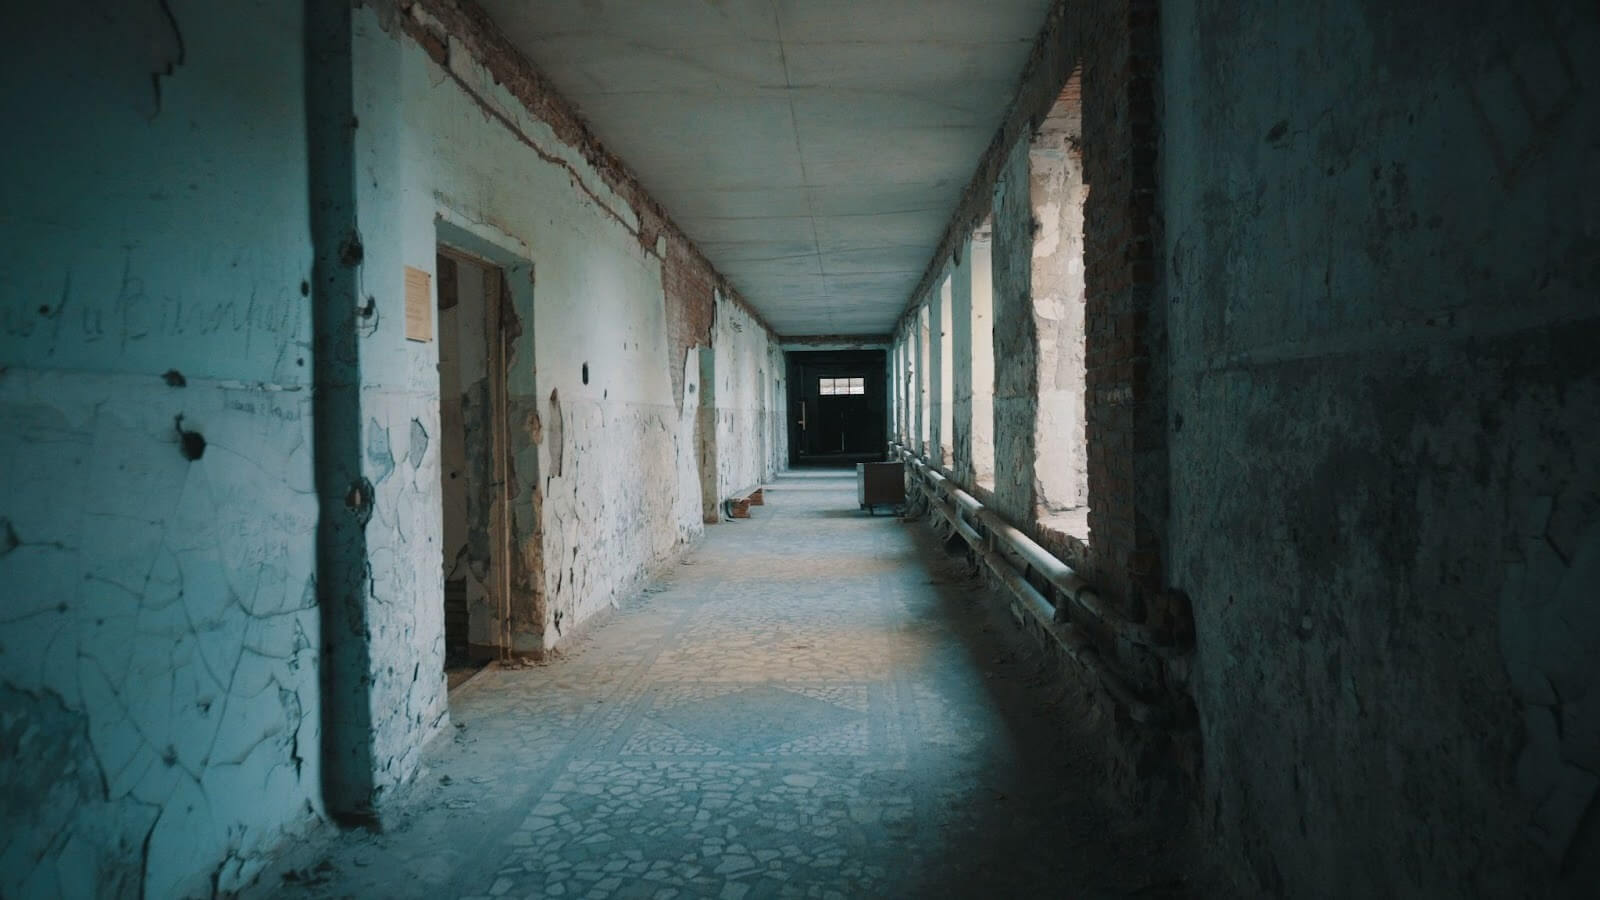 A deserted school corridor after the terrorist attack in Beslan. Adobe Stock education license.